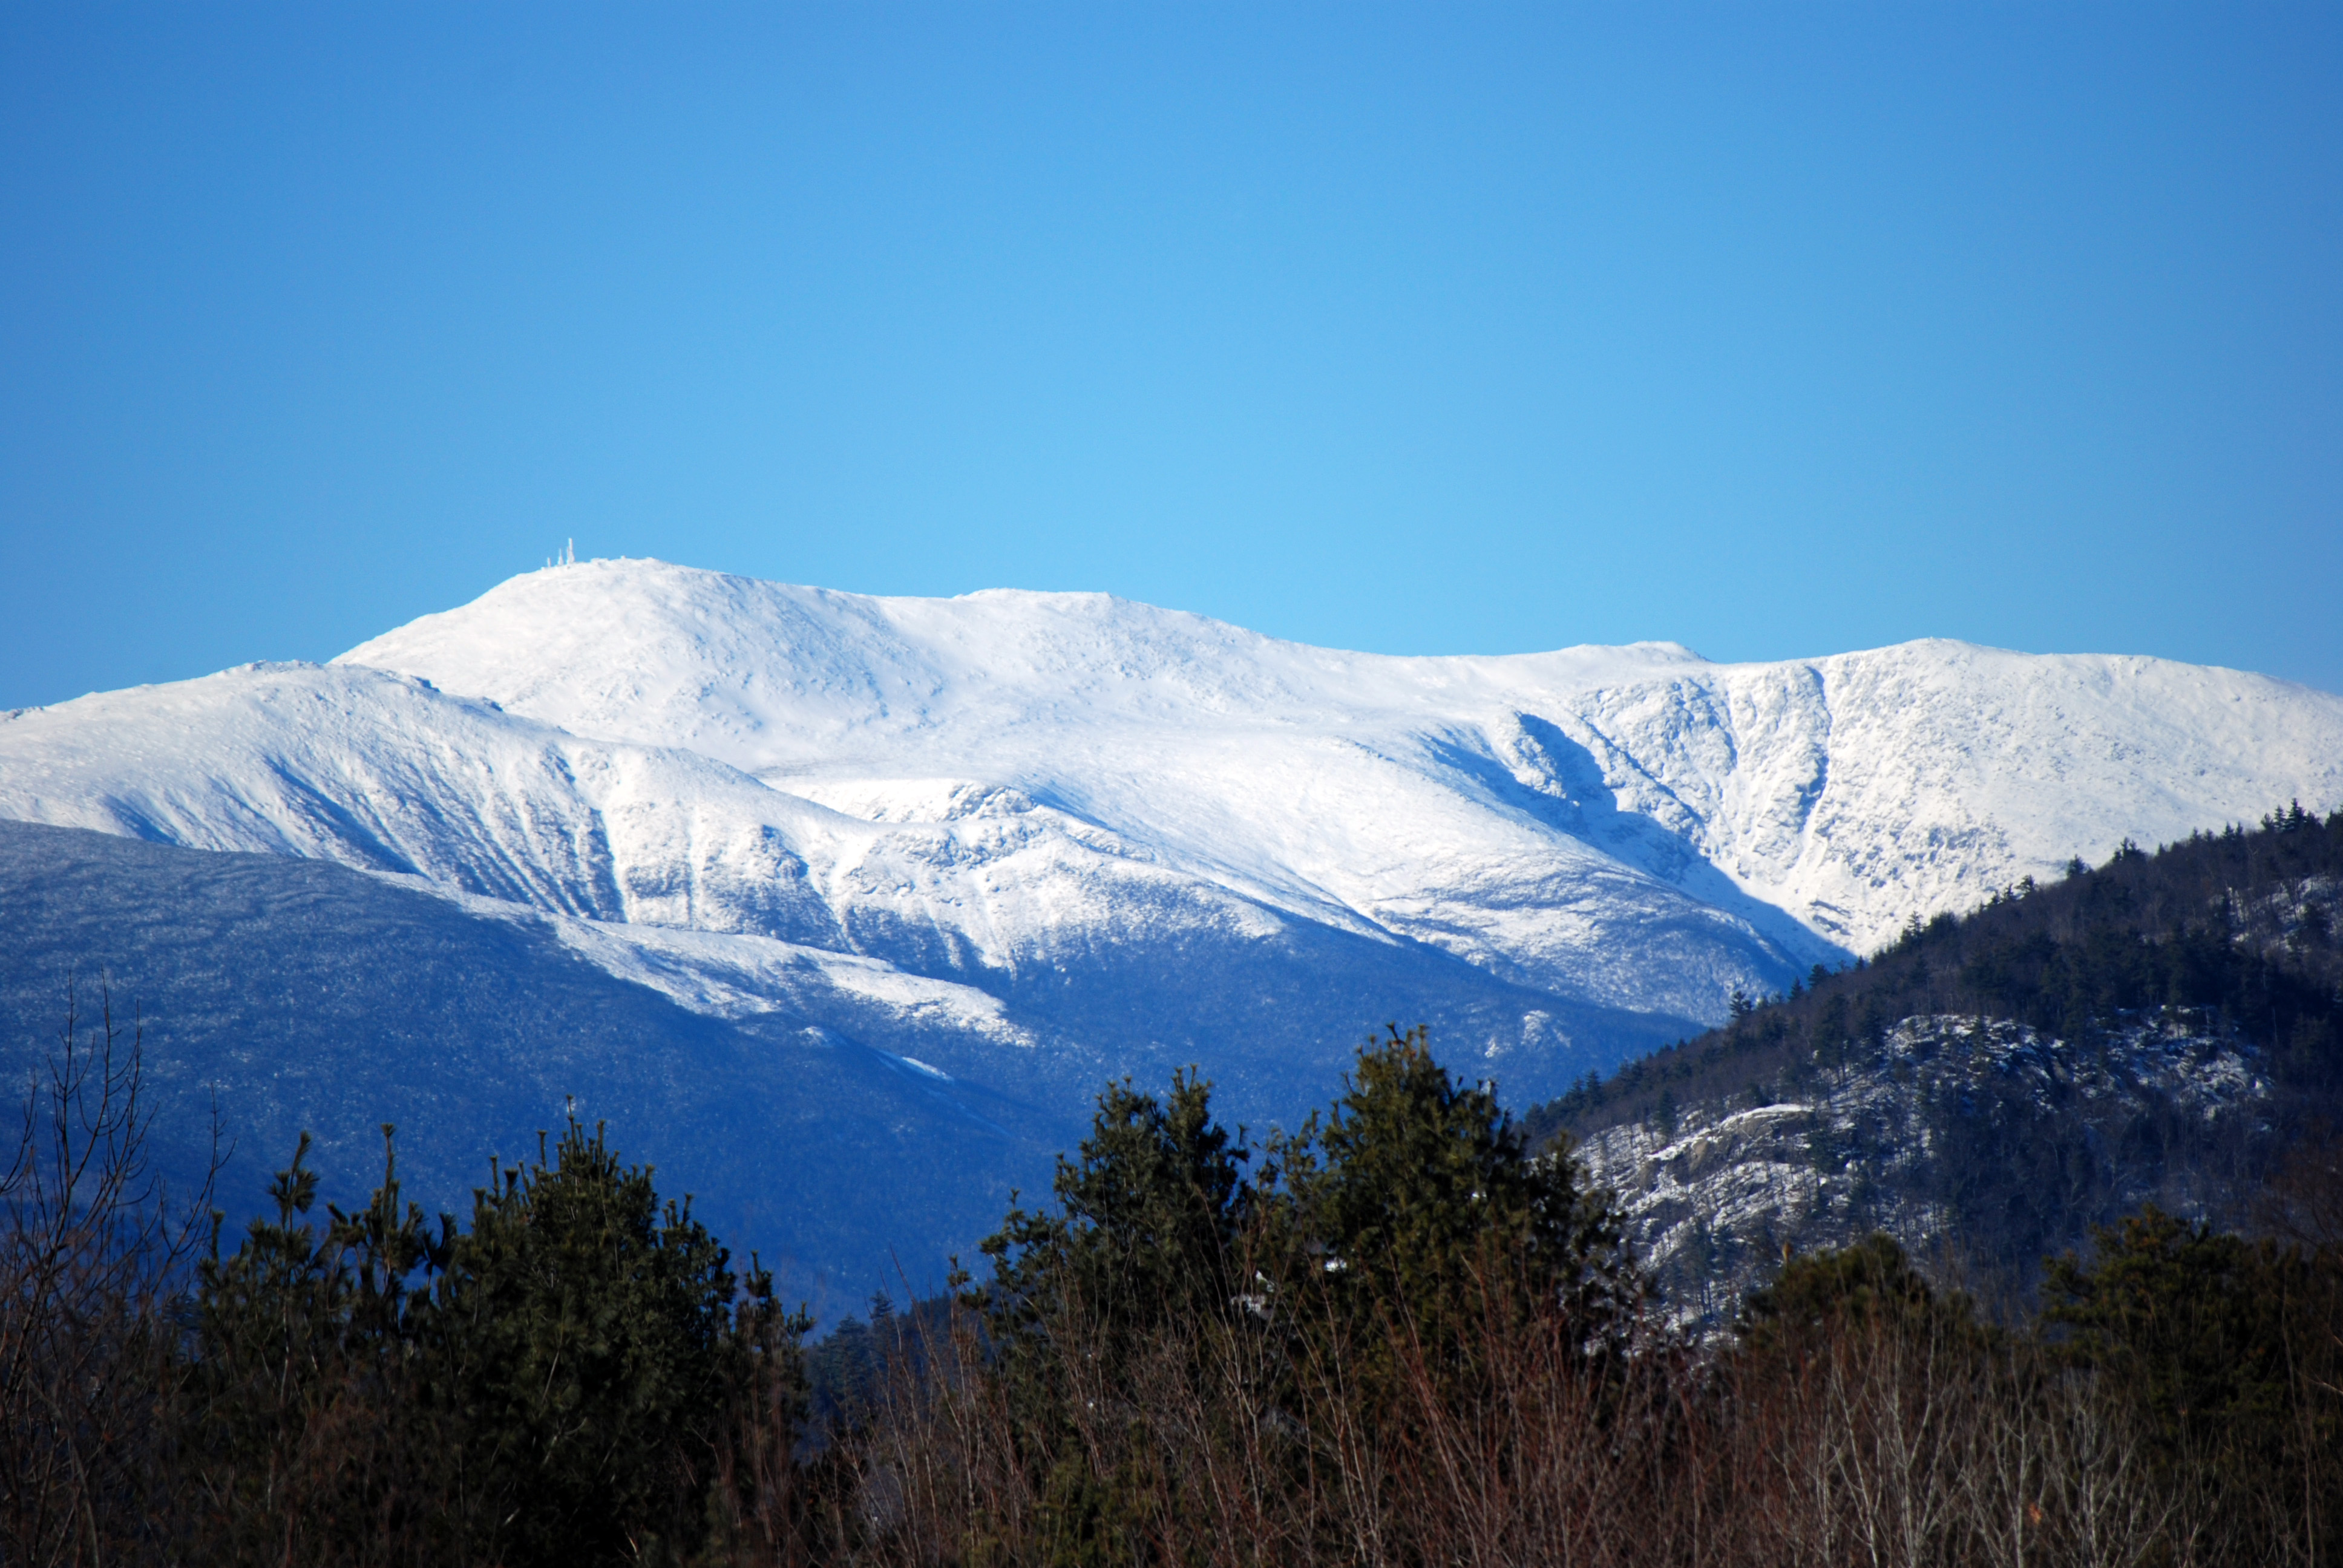 File:White Mountains 12 30 09 81.jpg - Wikimedia Commons